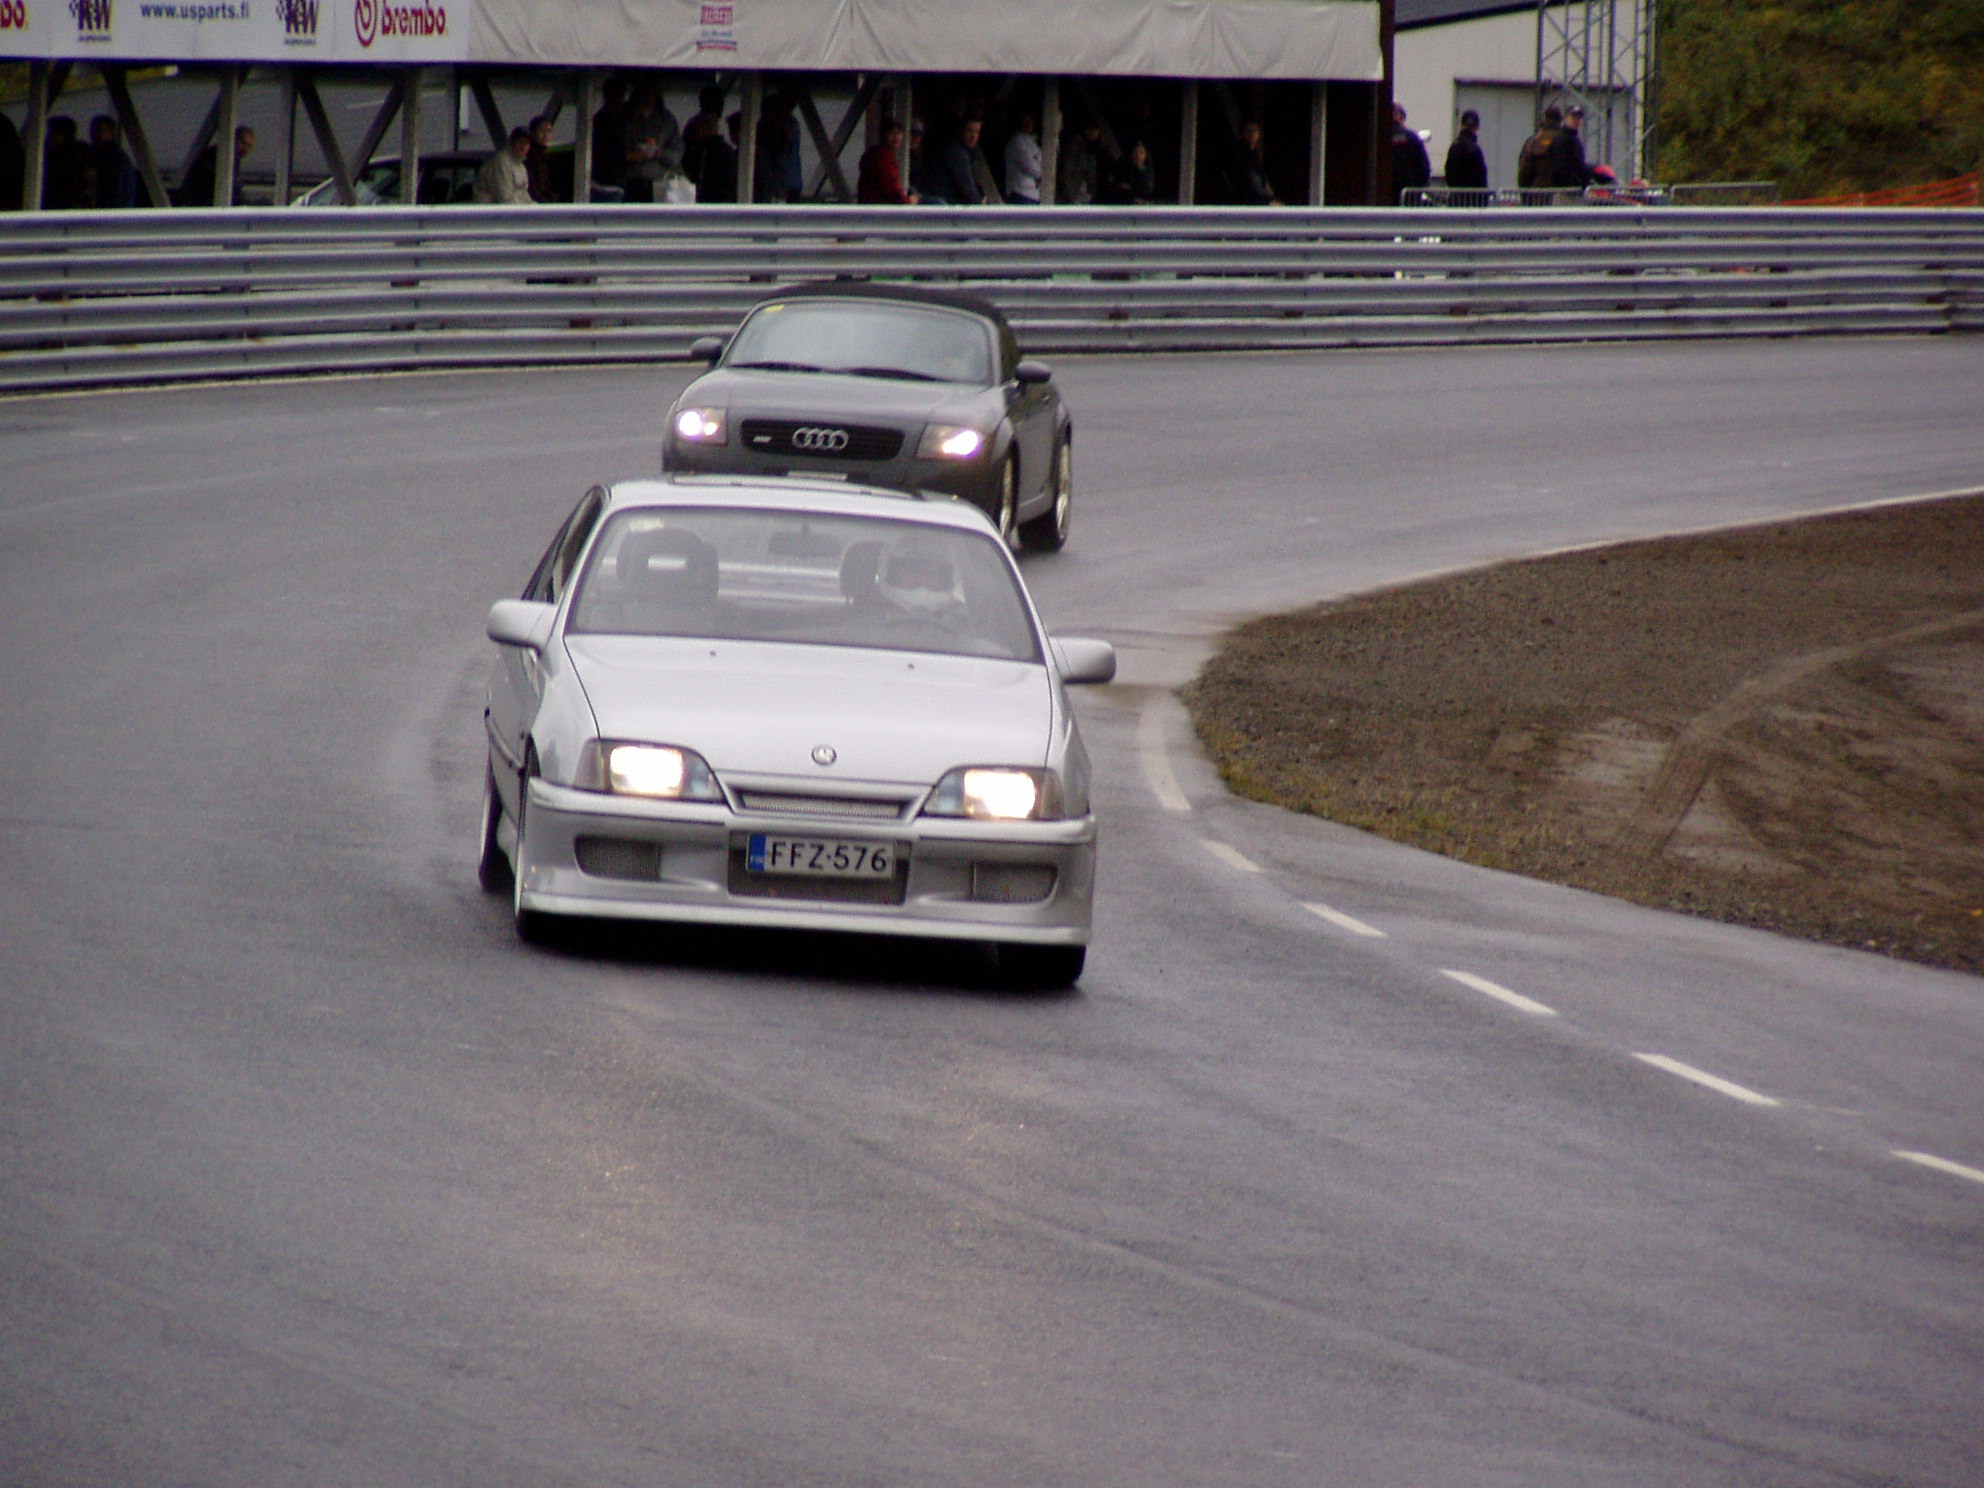 Sunday on racetrack 18.9.2005, Harmaa Opel Omega